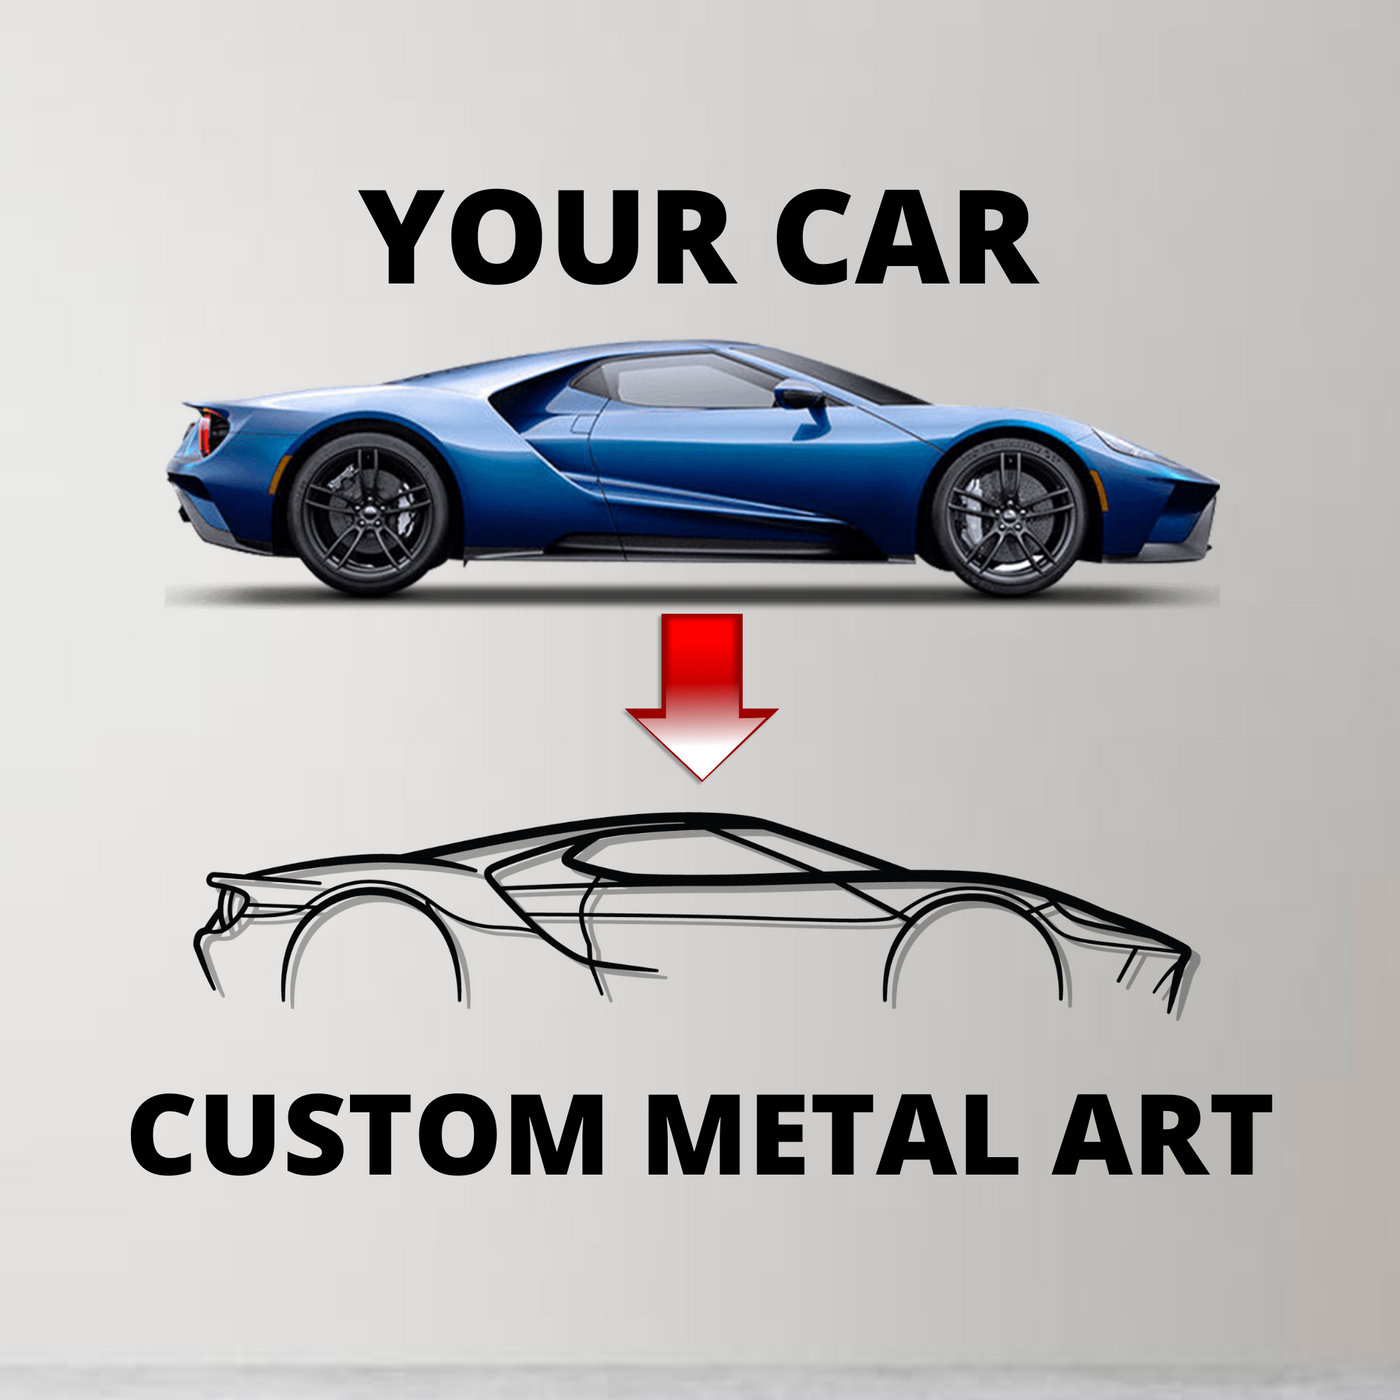 Camaro 2020 Front Silhouette Metal Wall Art